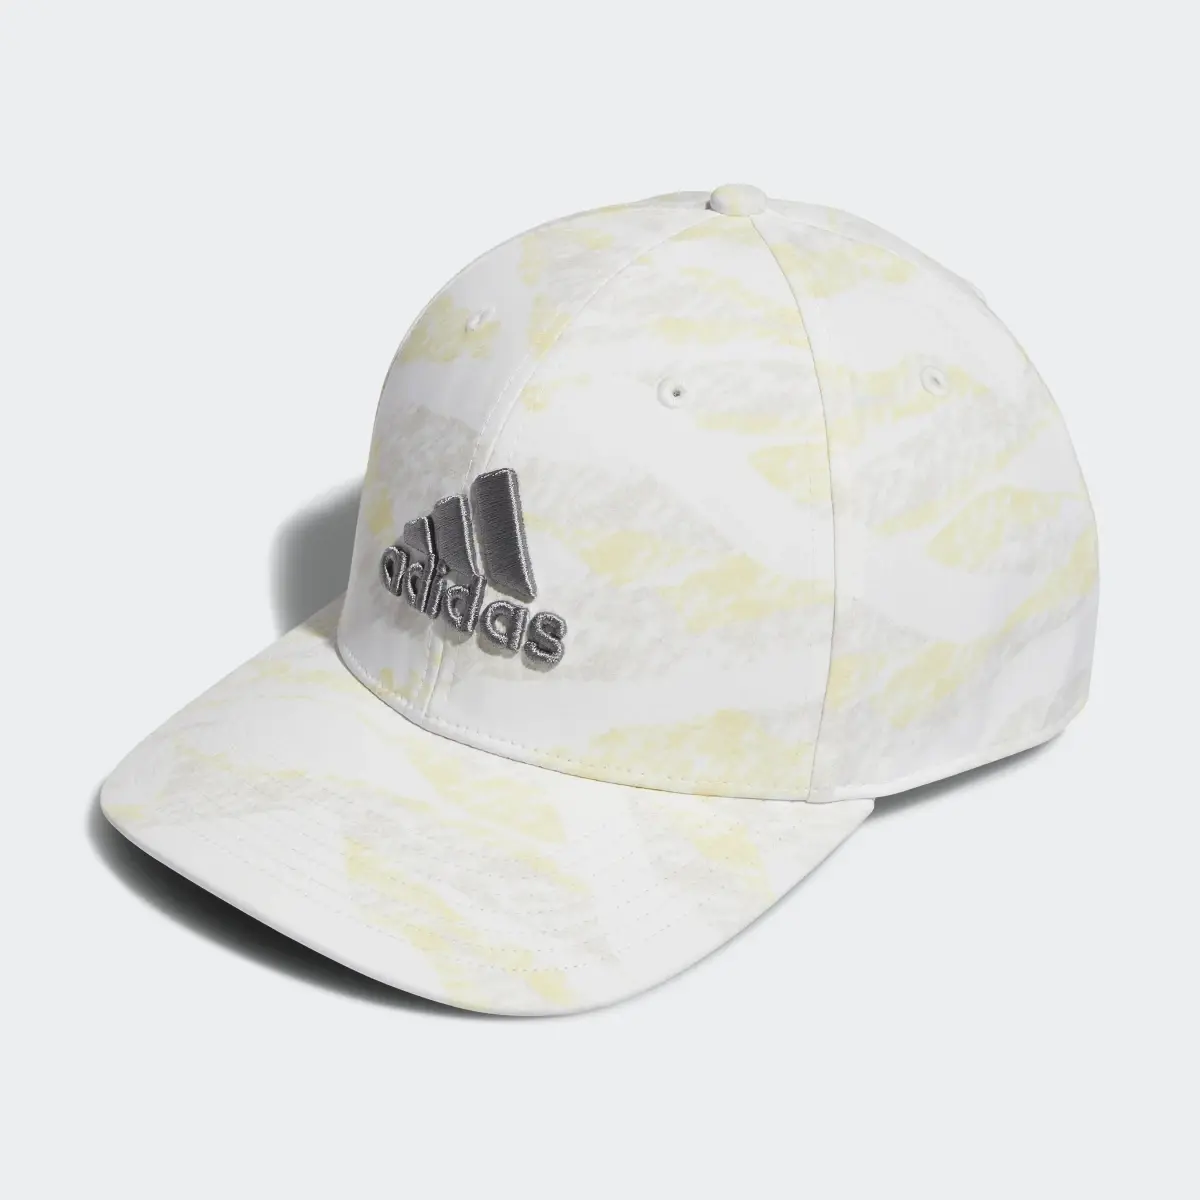 Adidas Tour Print Hat. 2